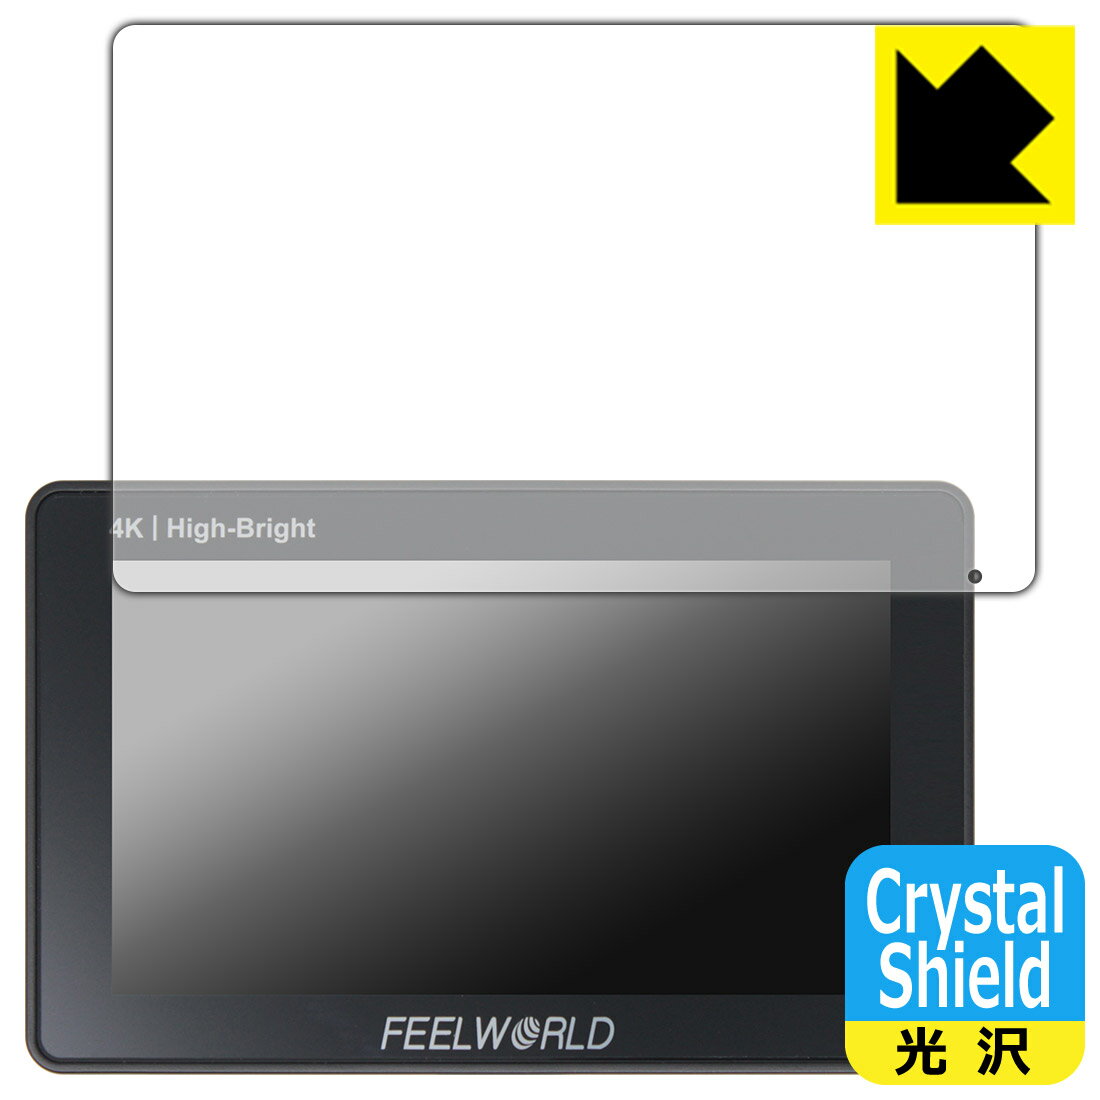 Crystal Shield【光沢】保護フィルム FEELWORLD F5 PROX (3枚セット) 日本製 自社製造直販